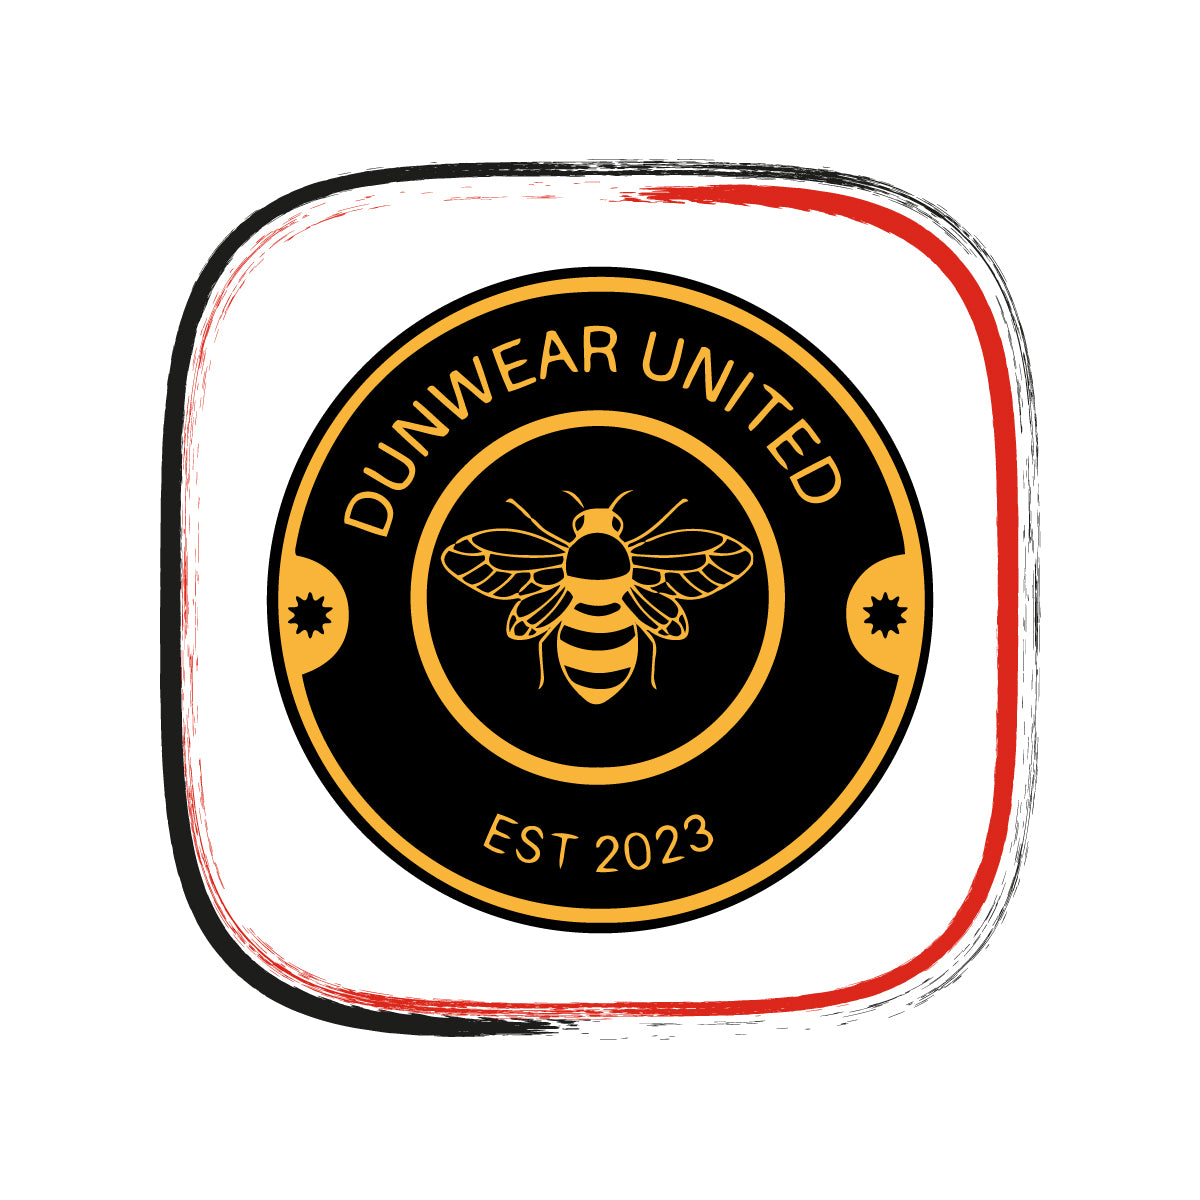 Dunwear United